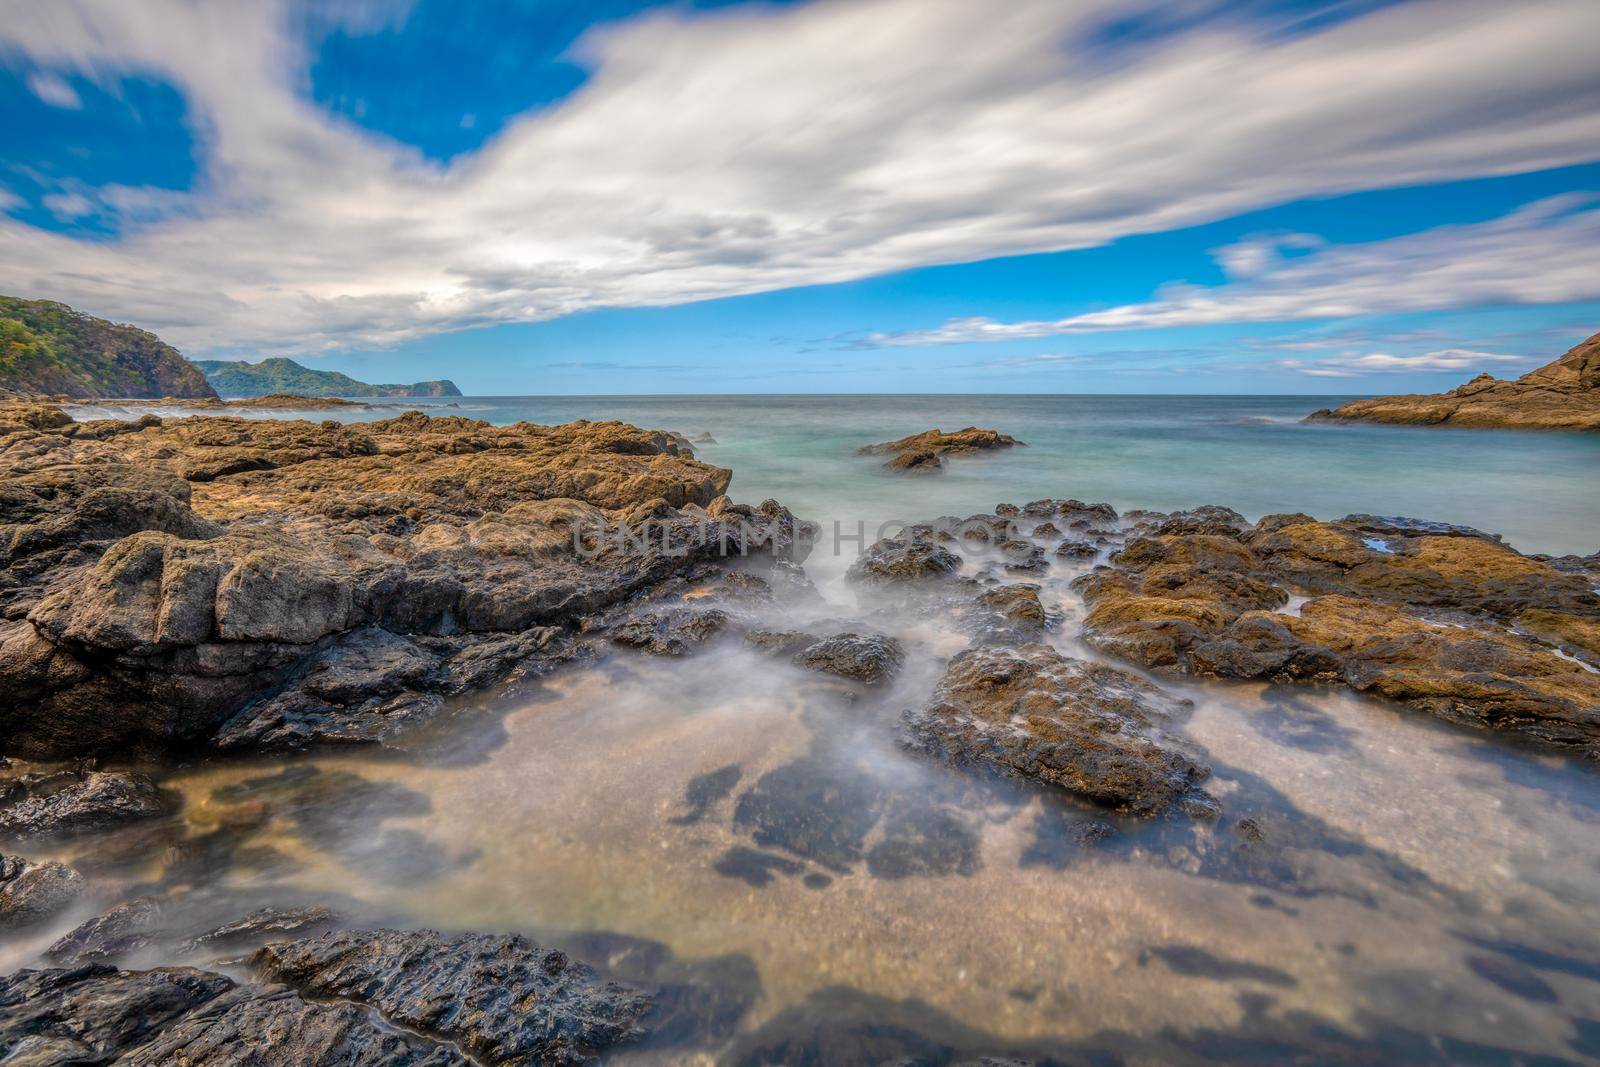 Long exposure, pacific ocean waves on rock in Playa Ocotal, El Coco Costa Rica by artush